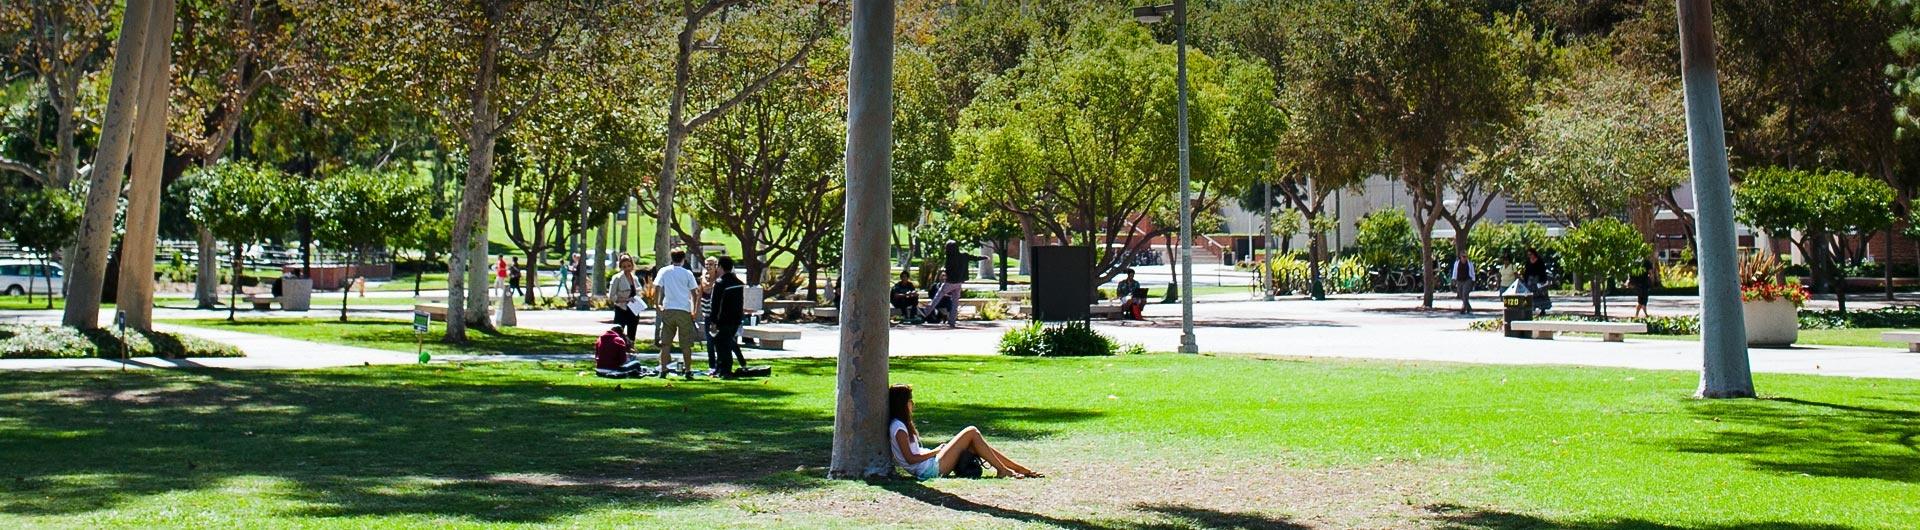 Grassy area on campus